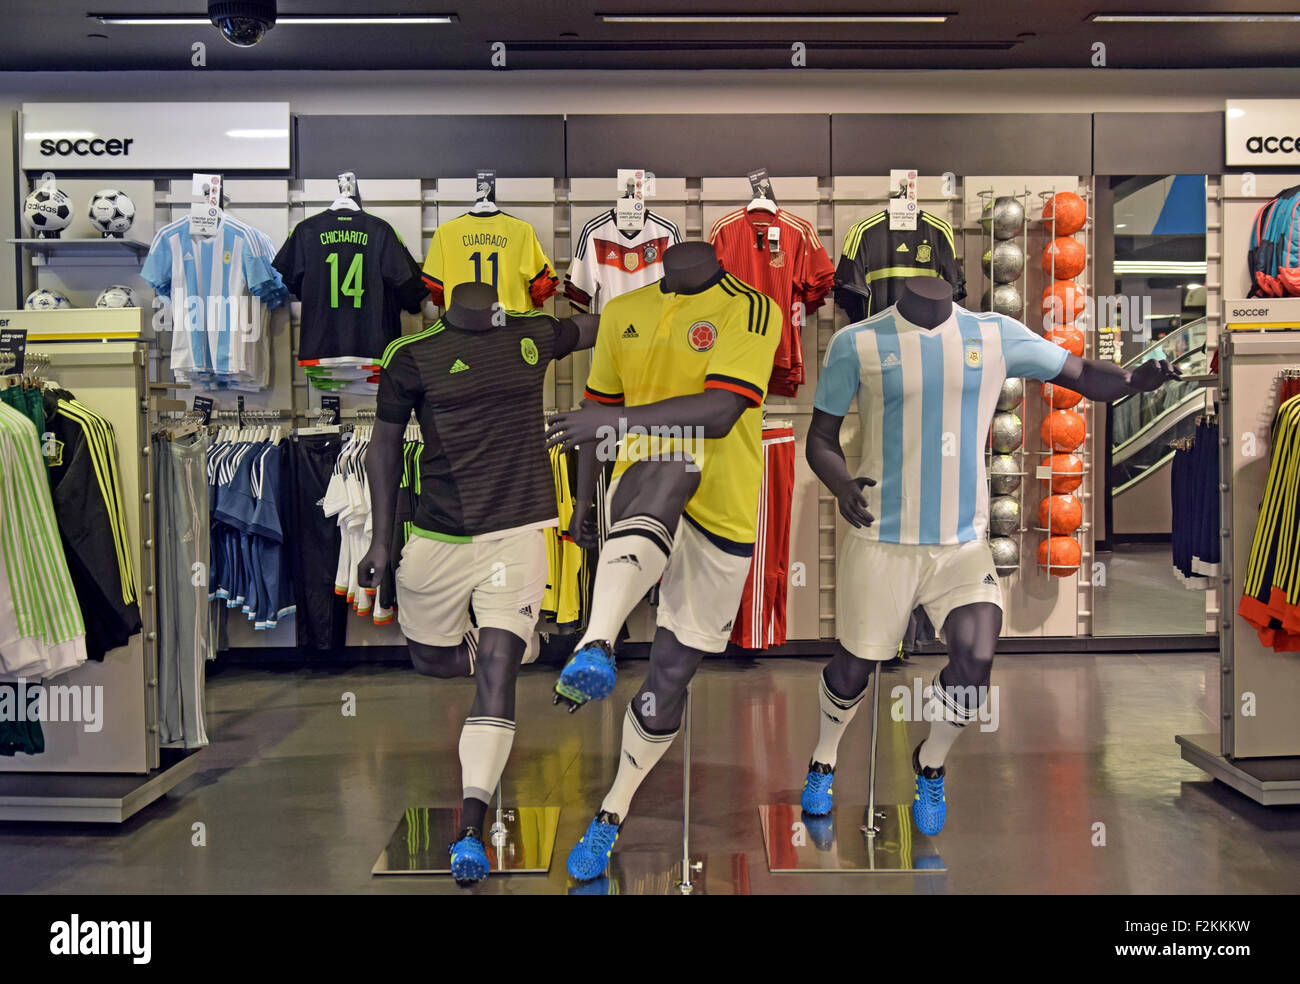 adidas soccer store